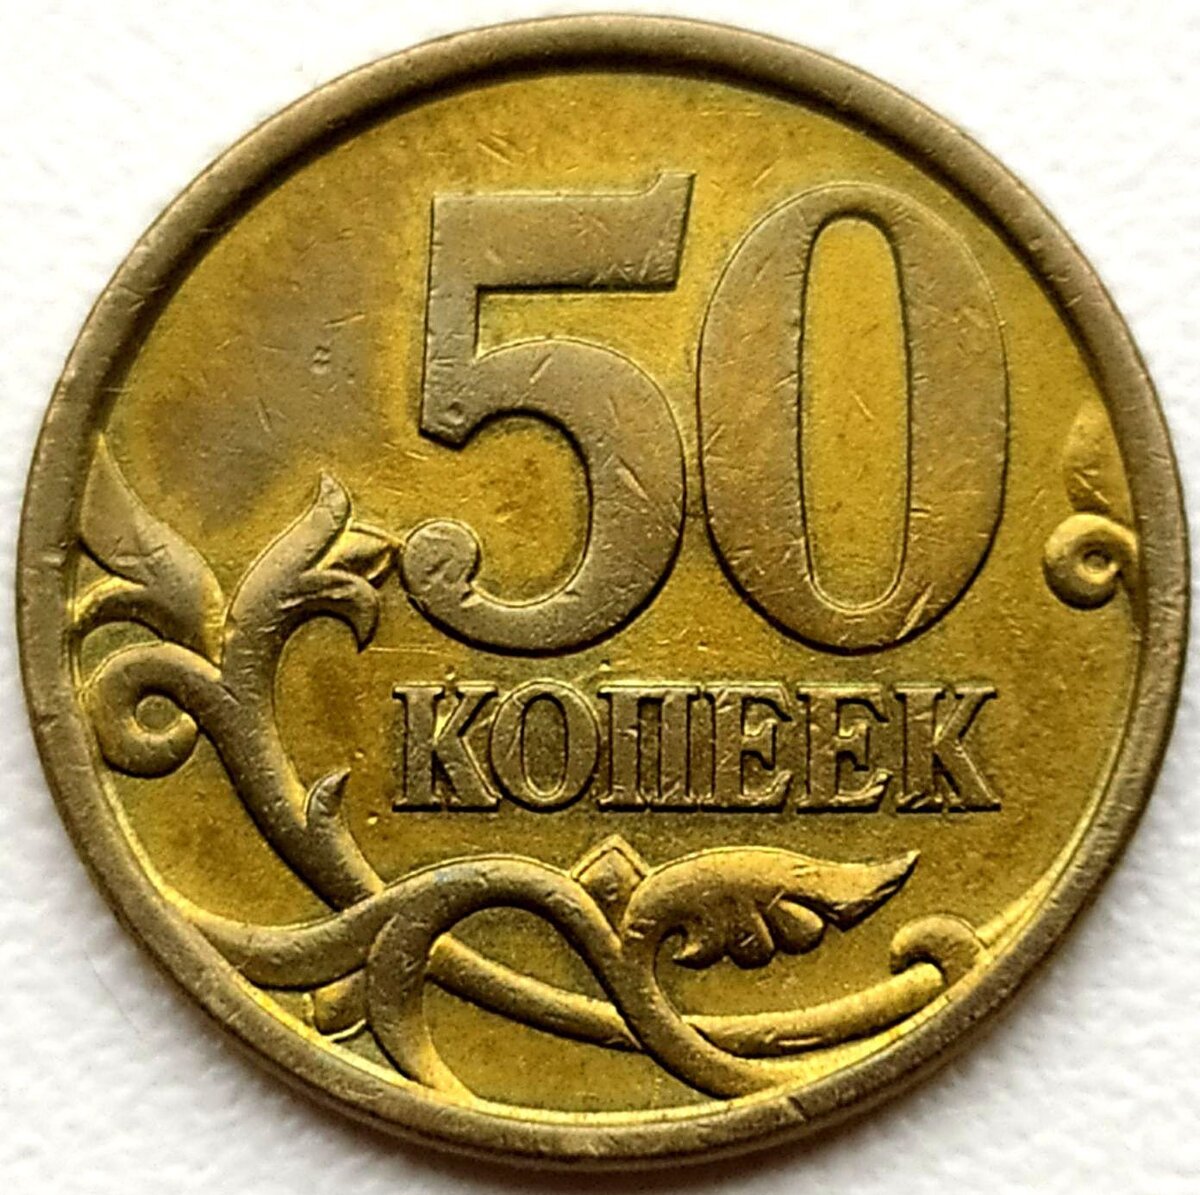 30 б рублей в рублях. 50 Копеек 2003 года m. Монета 50 копеек 2003 м. 30 Рублей монета. 500 Рублей монета.